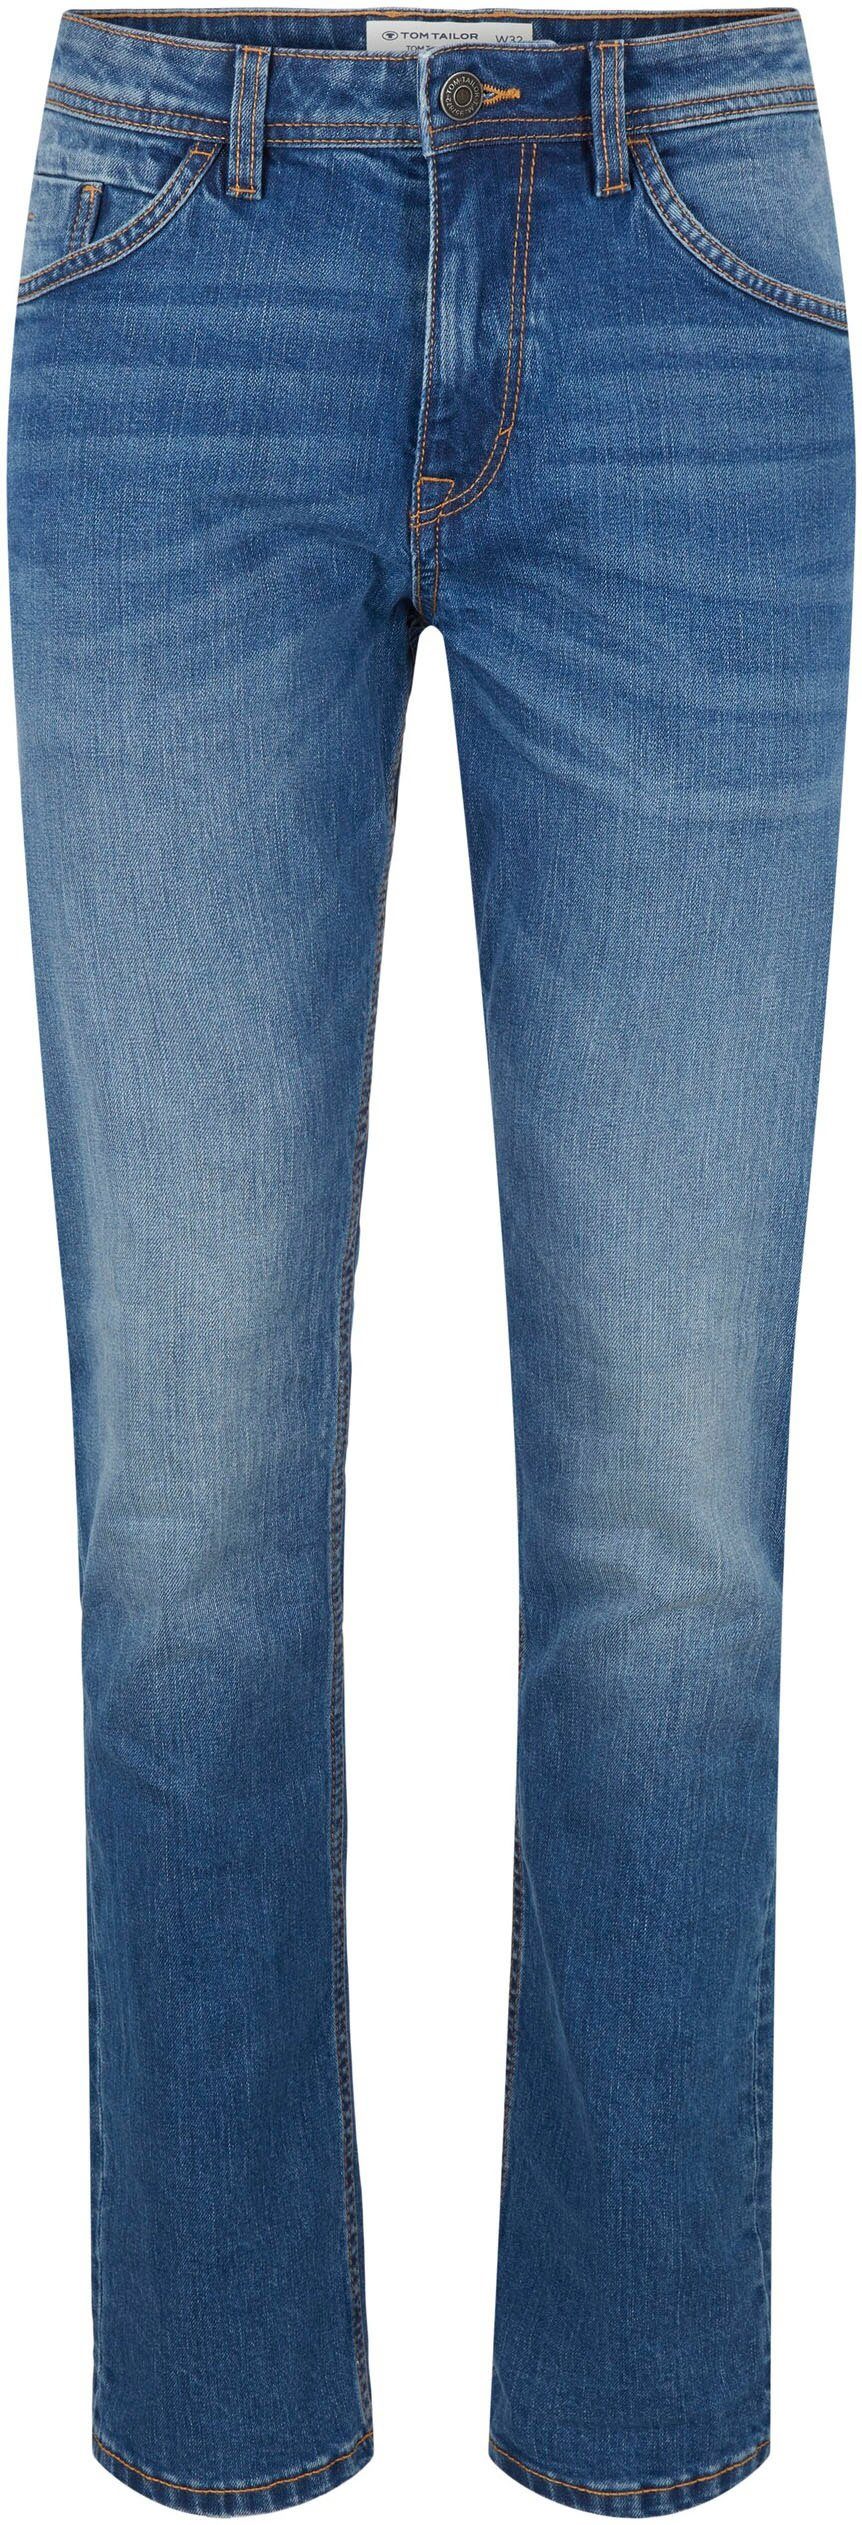 TOM TAILOR 5-Pocket-Jeans Josh Reißverschluss stone mid mit used